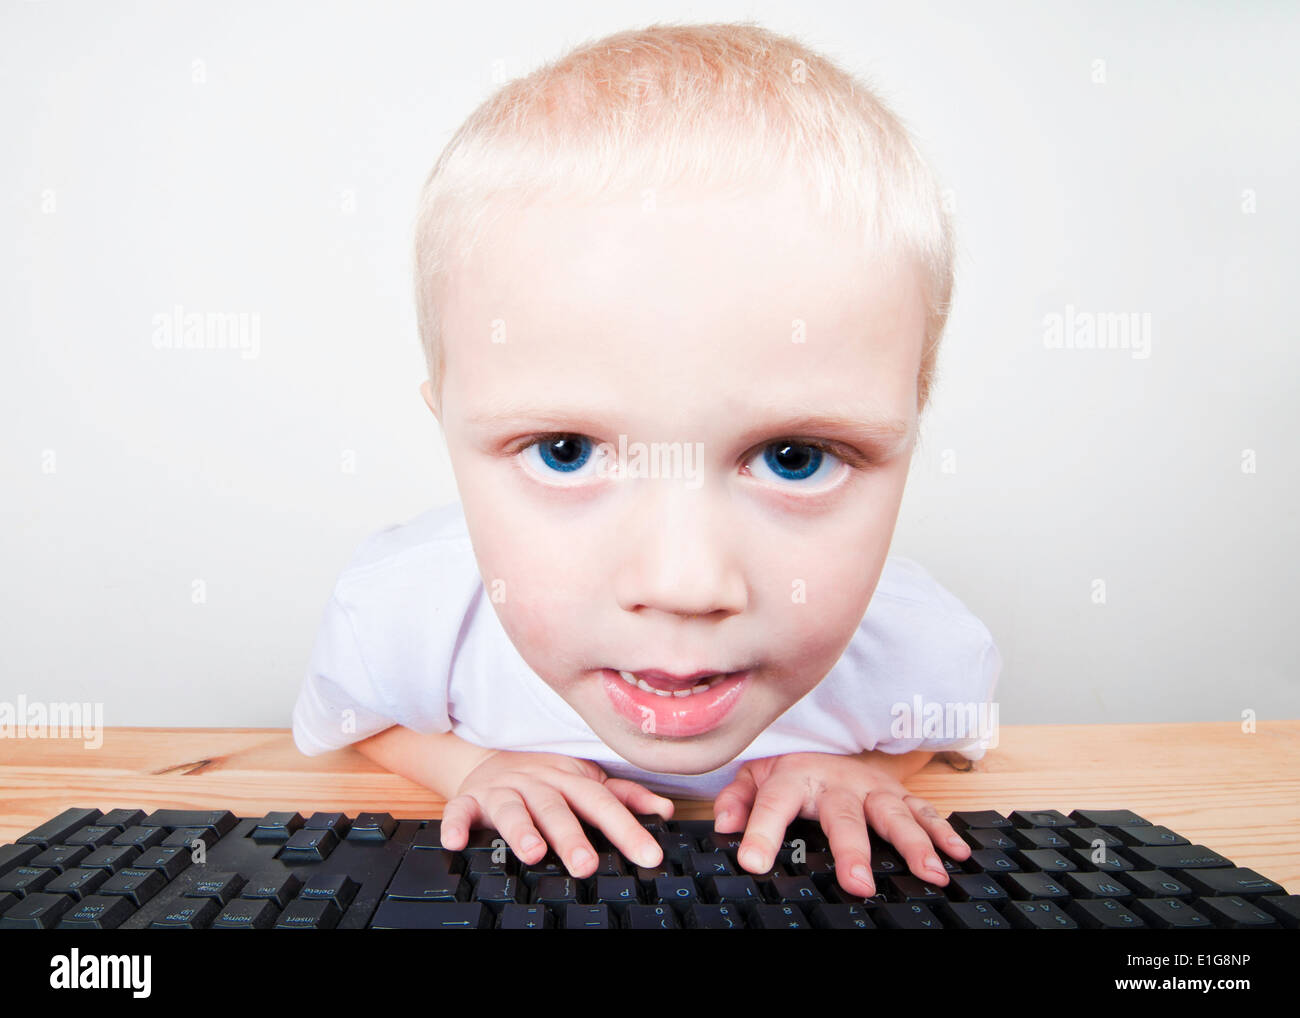 Small boy looking at computer screen Stock Photo